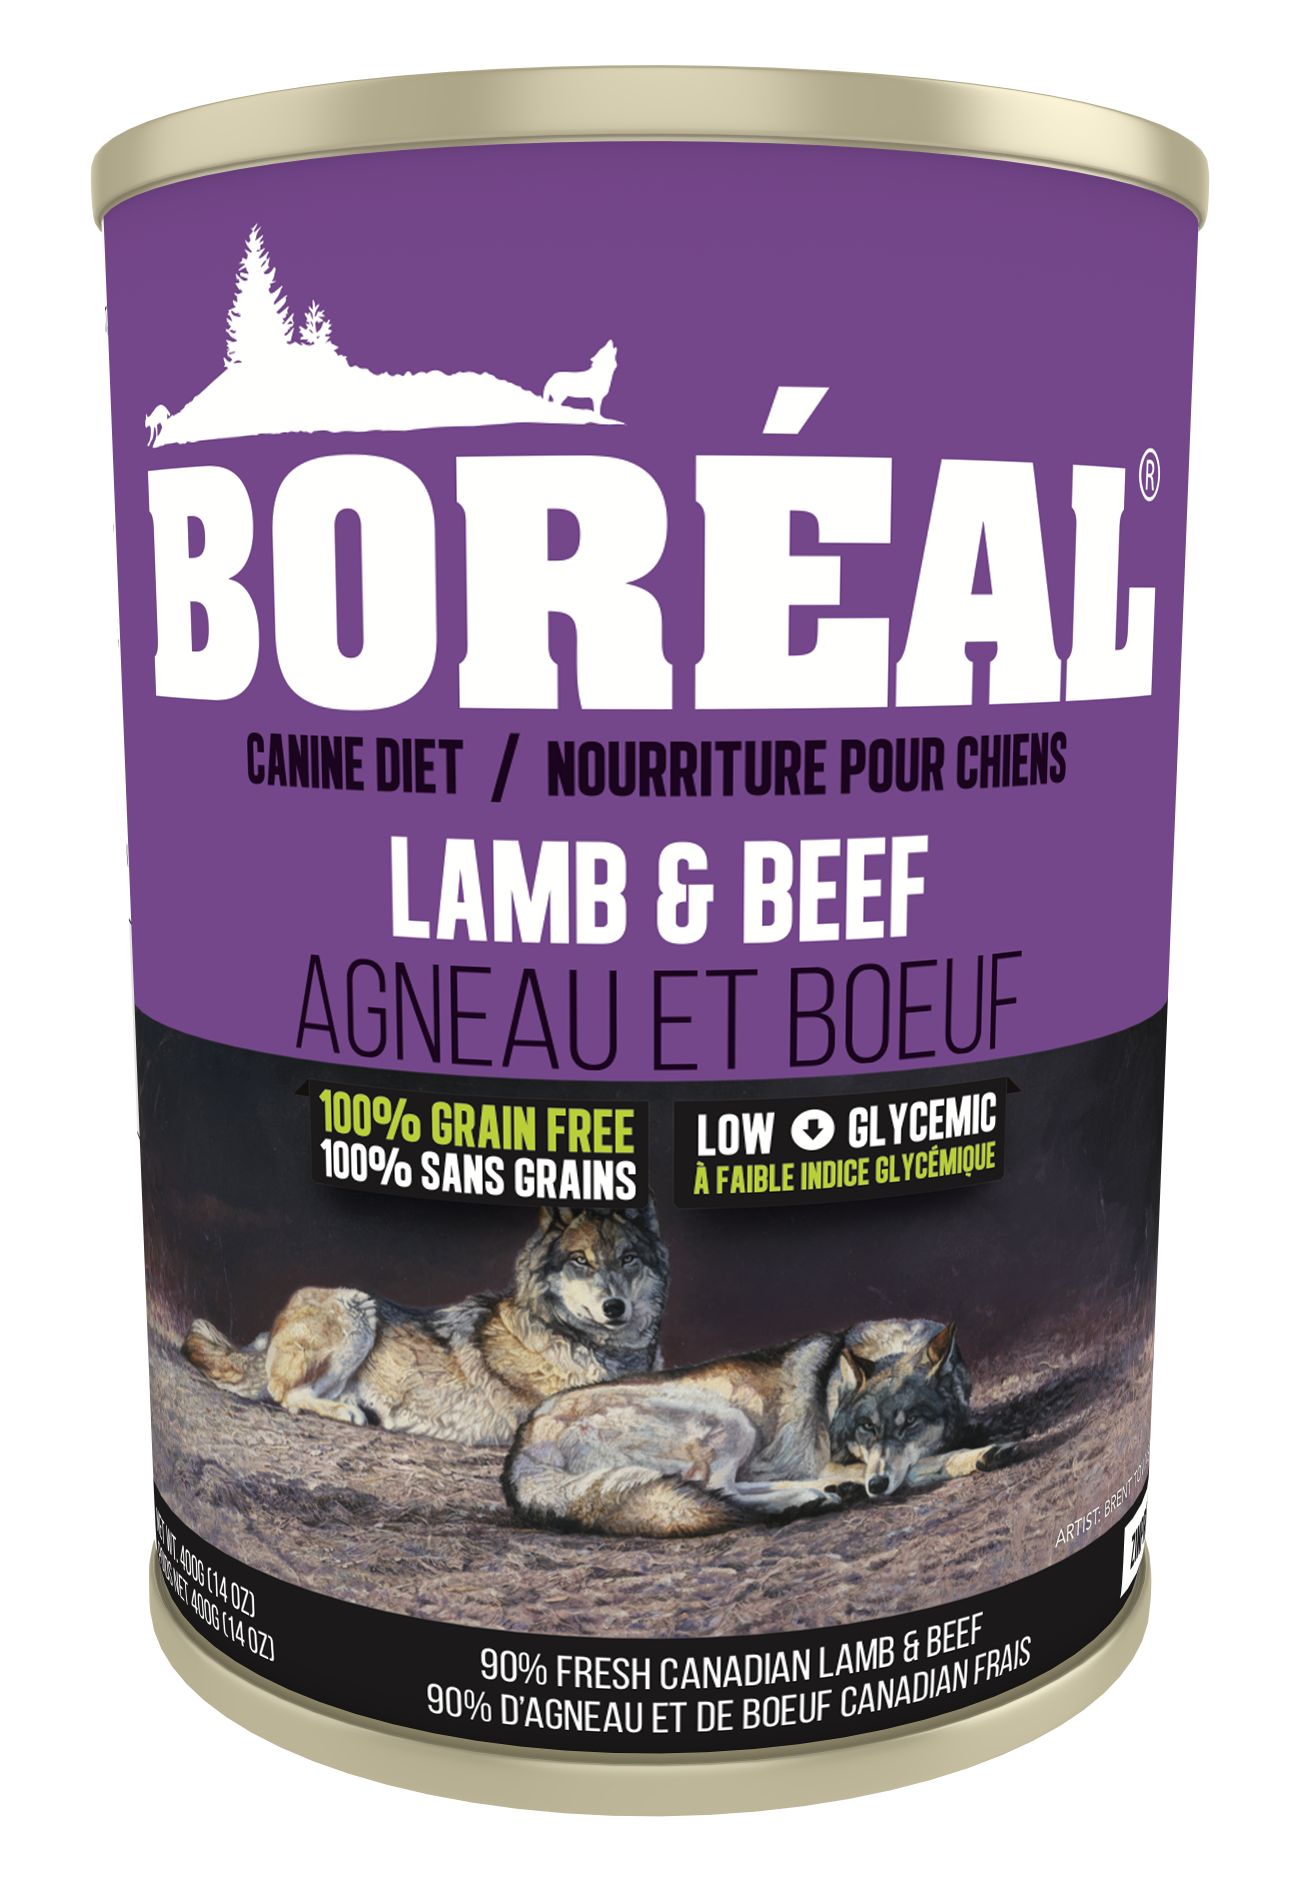 Boréal Functional Canned Dog Food, Big Bear Lamb & Beef